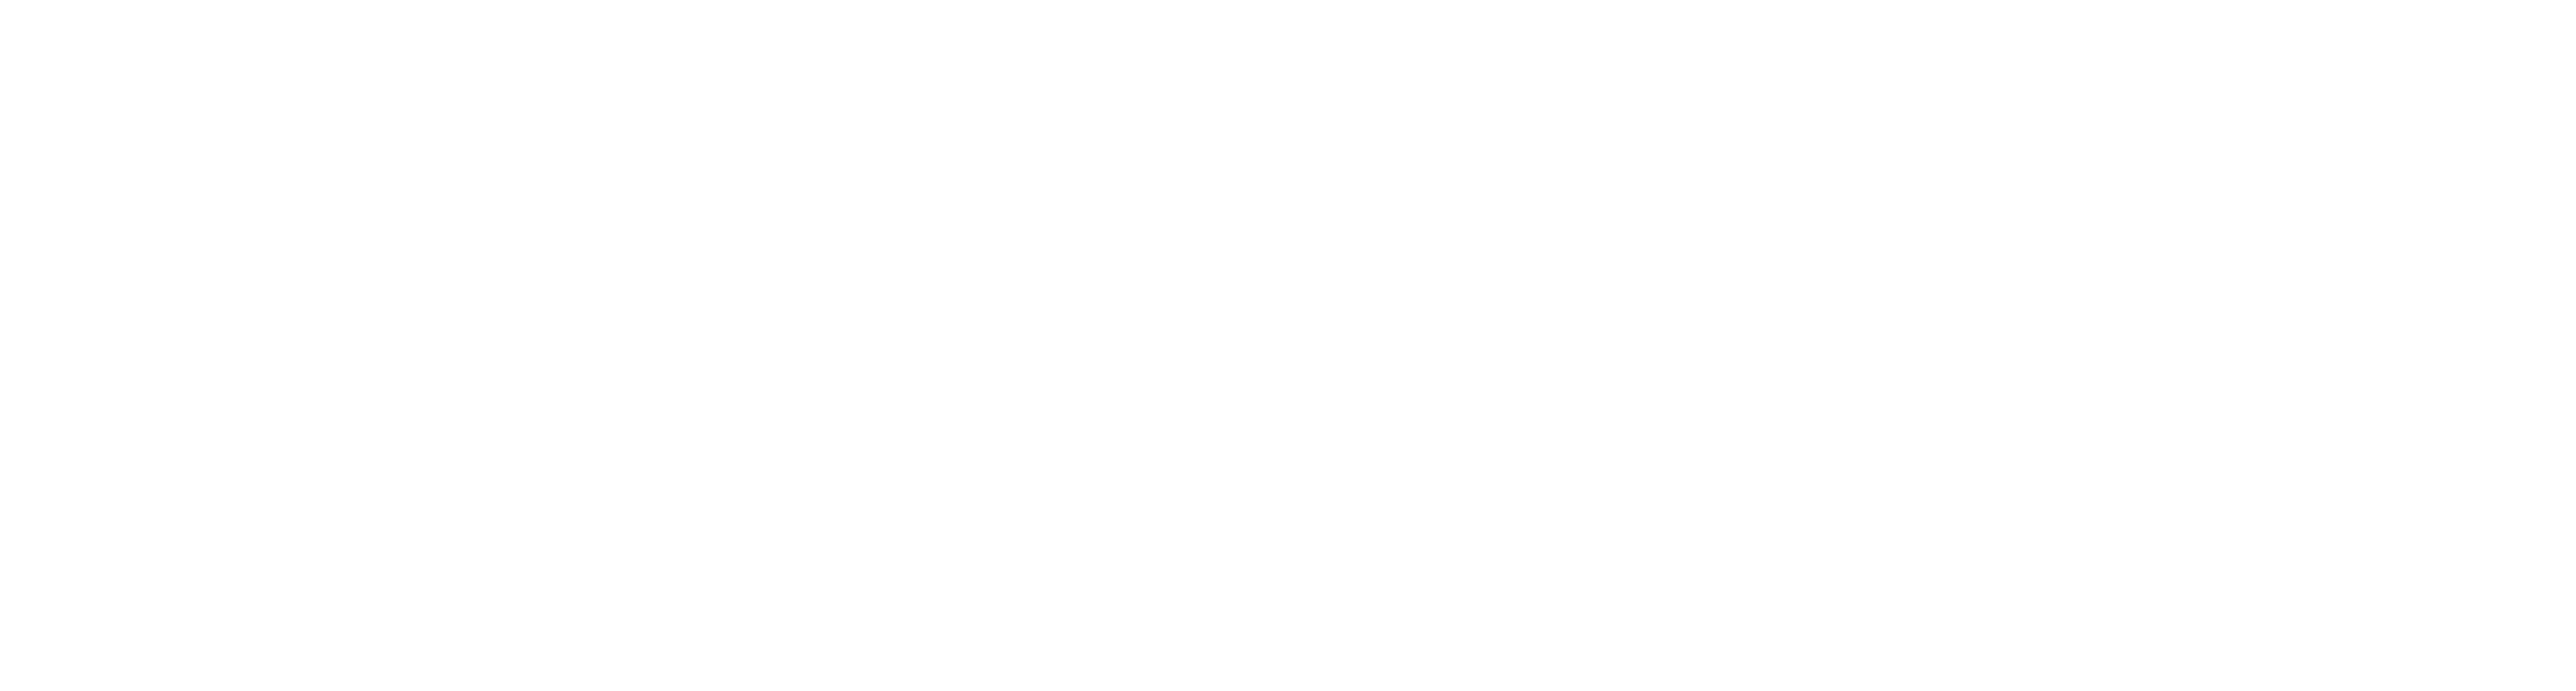 Digilant Logo